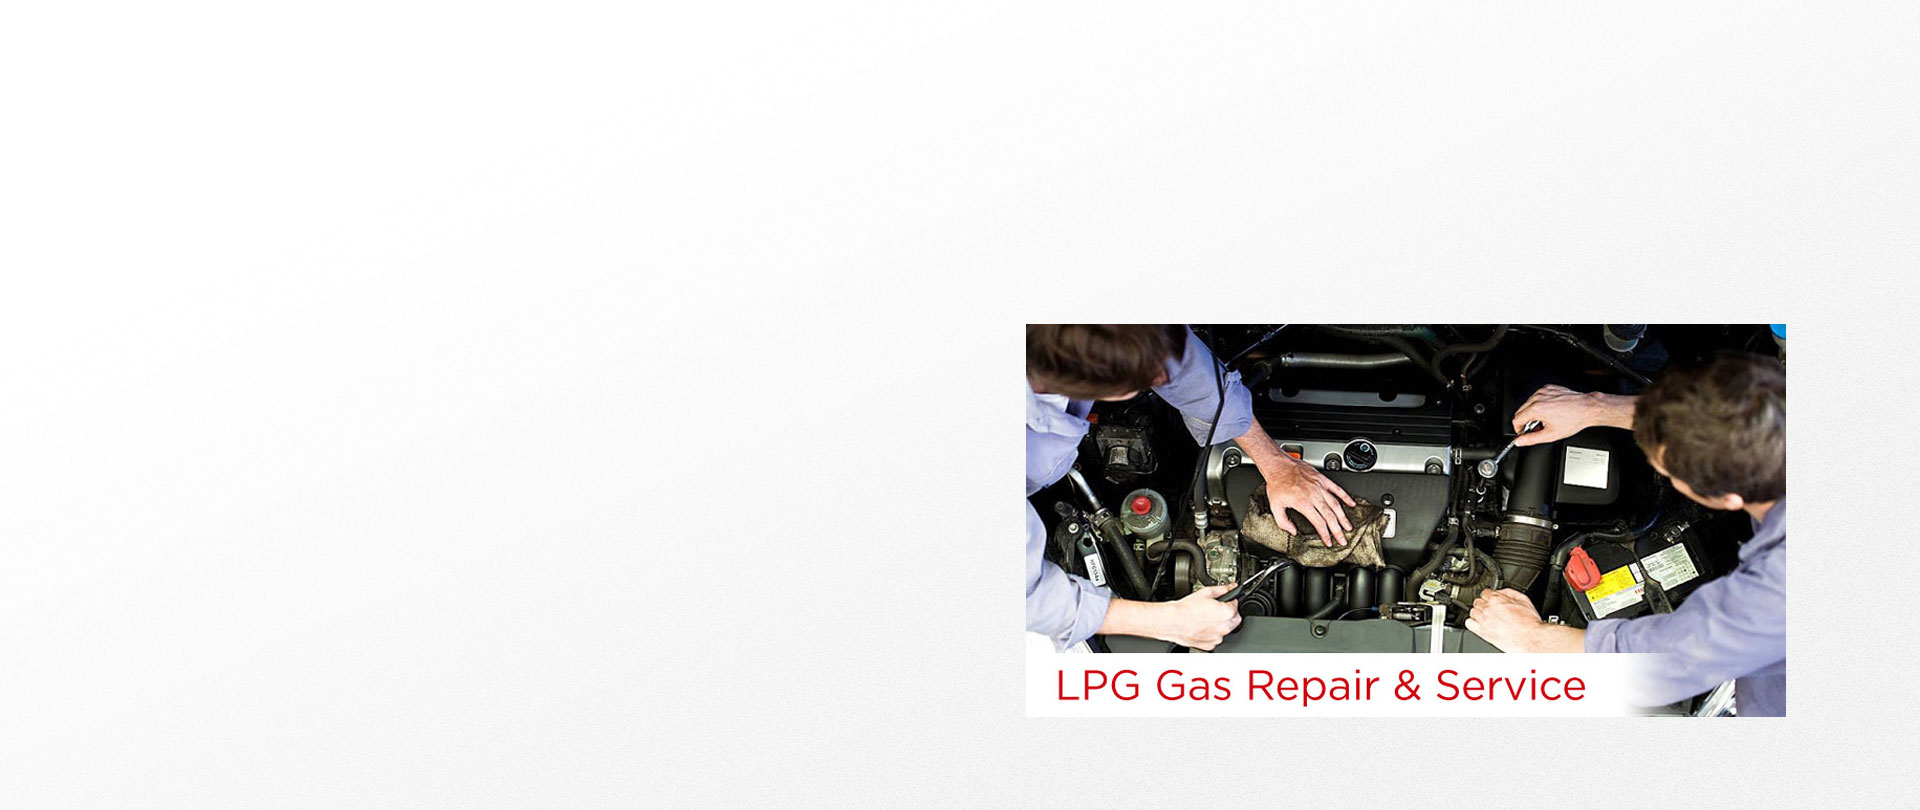 LPG Gas Repair & Service